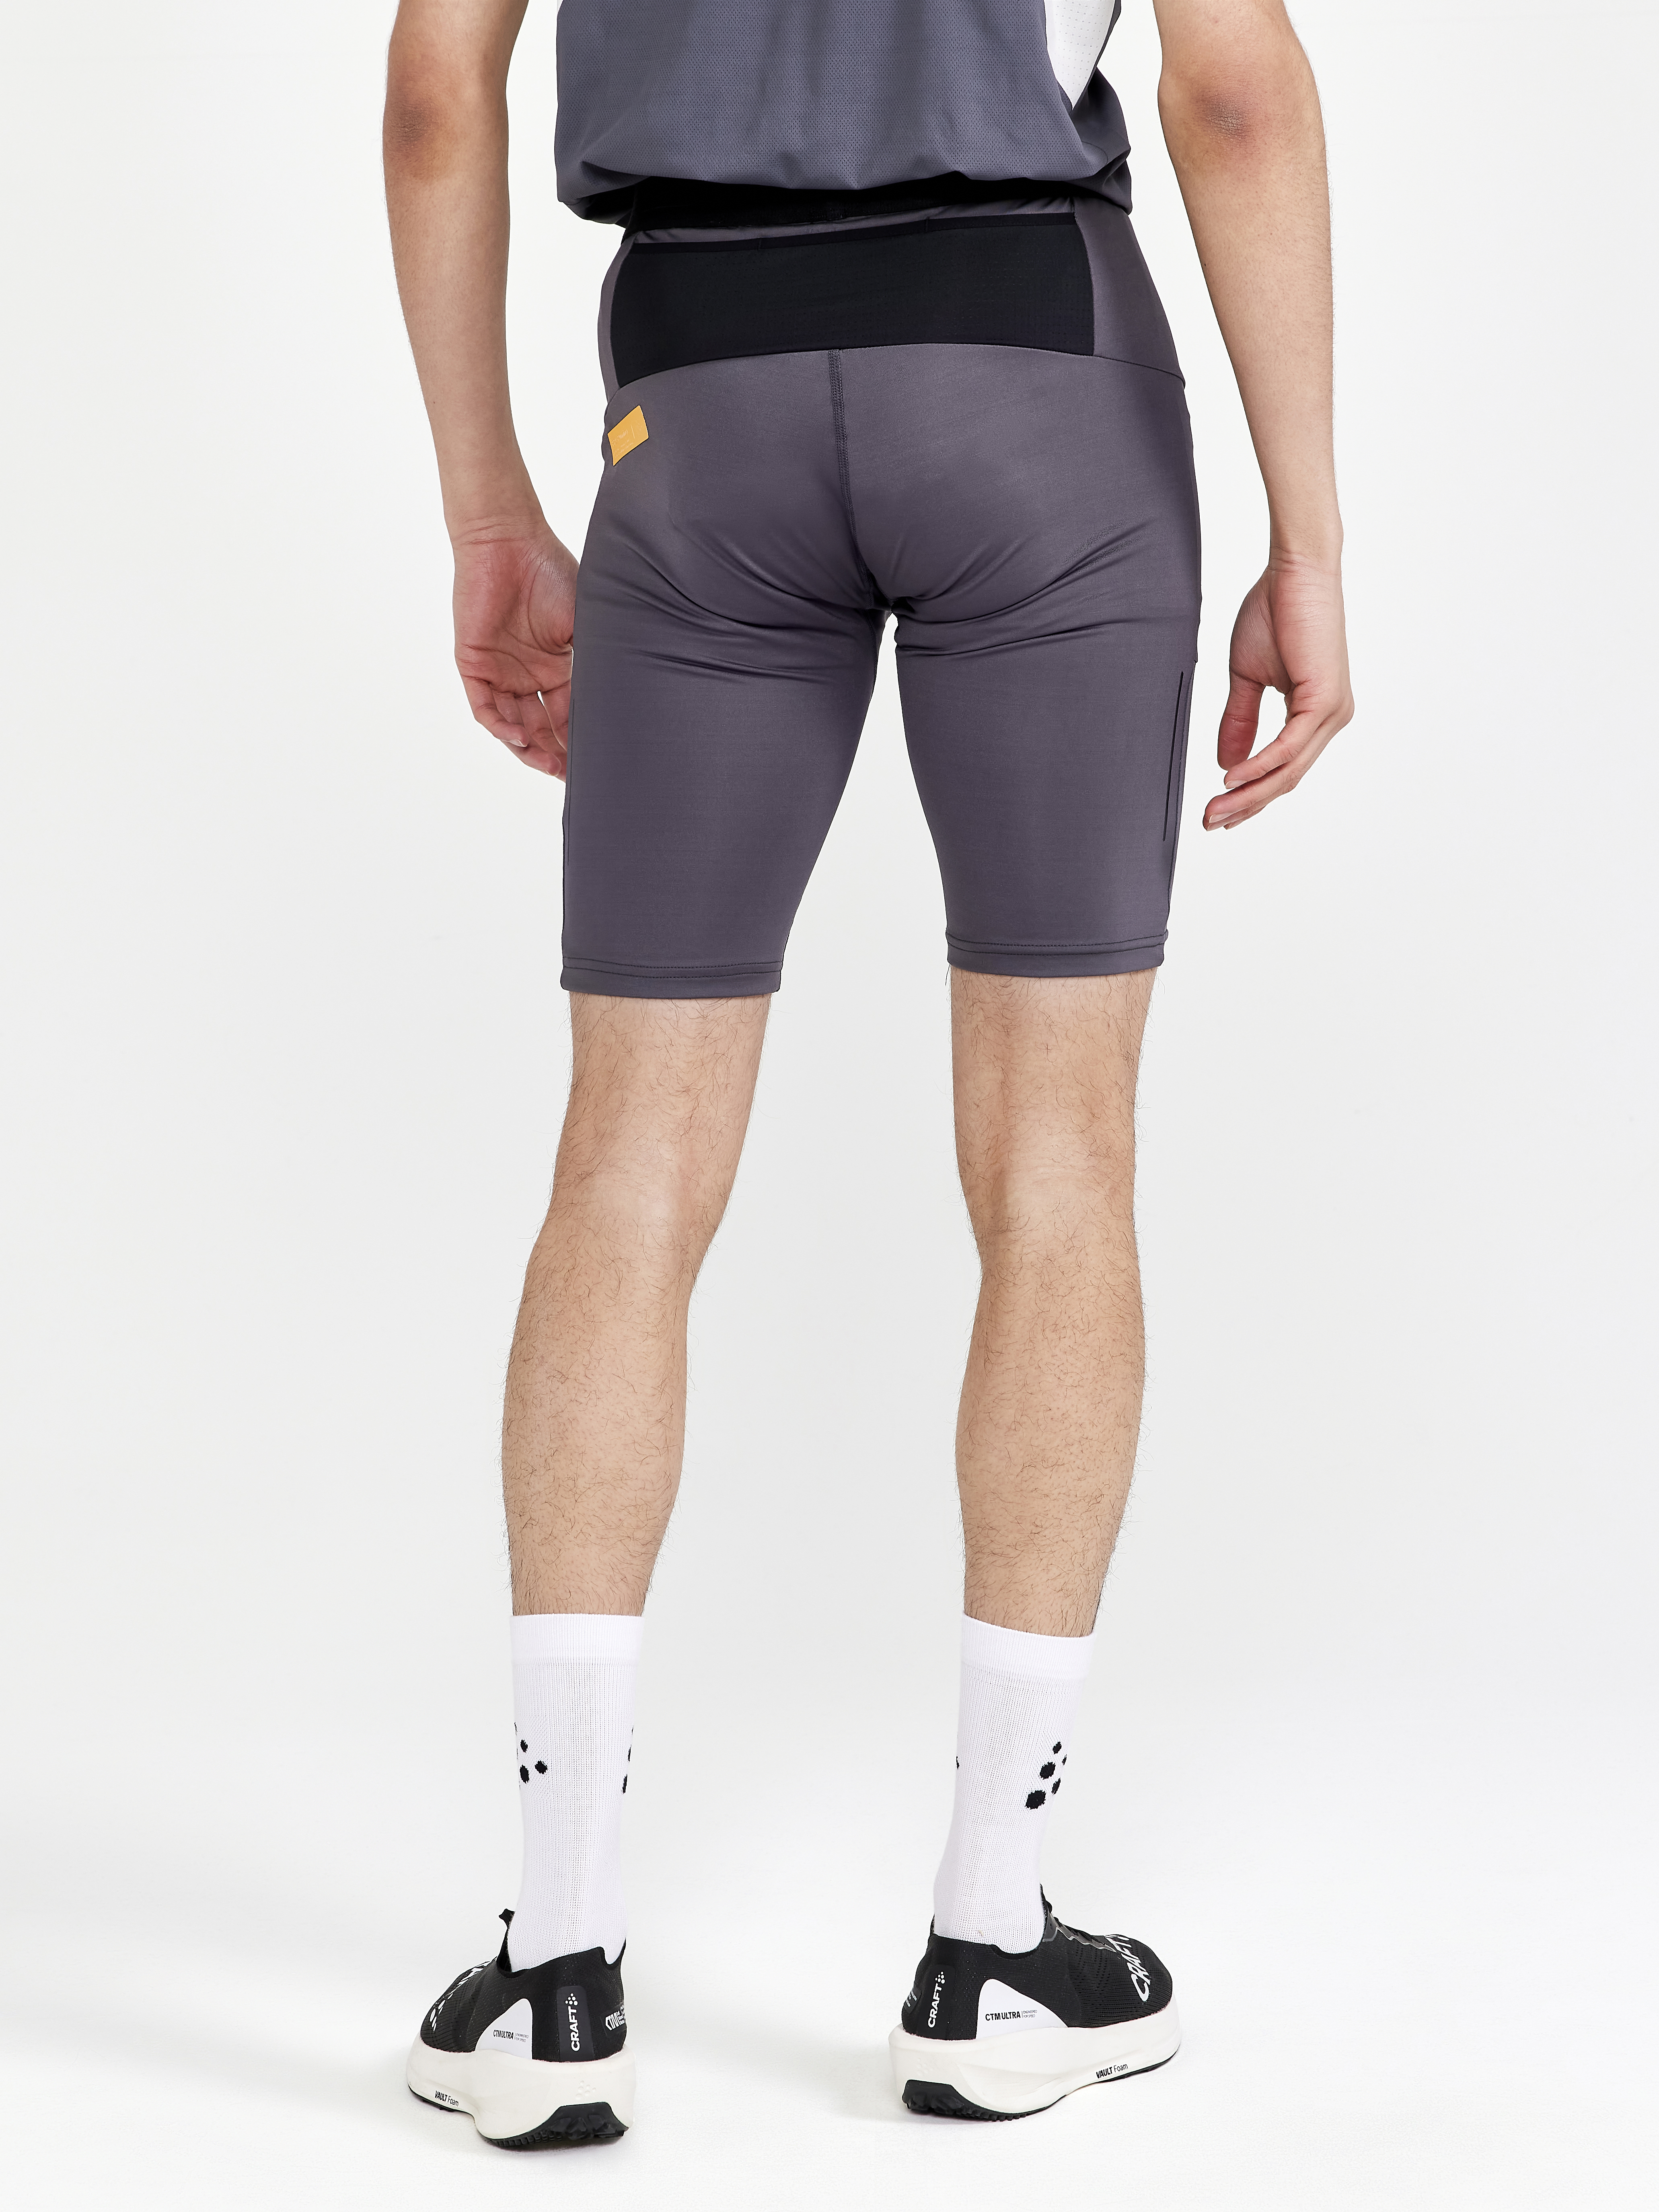 beliebter Bradon PRO Hypervent Short Grey | Tights Sportswear - M Craft